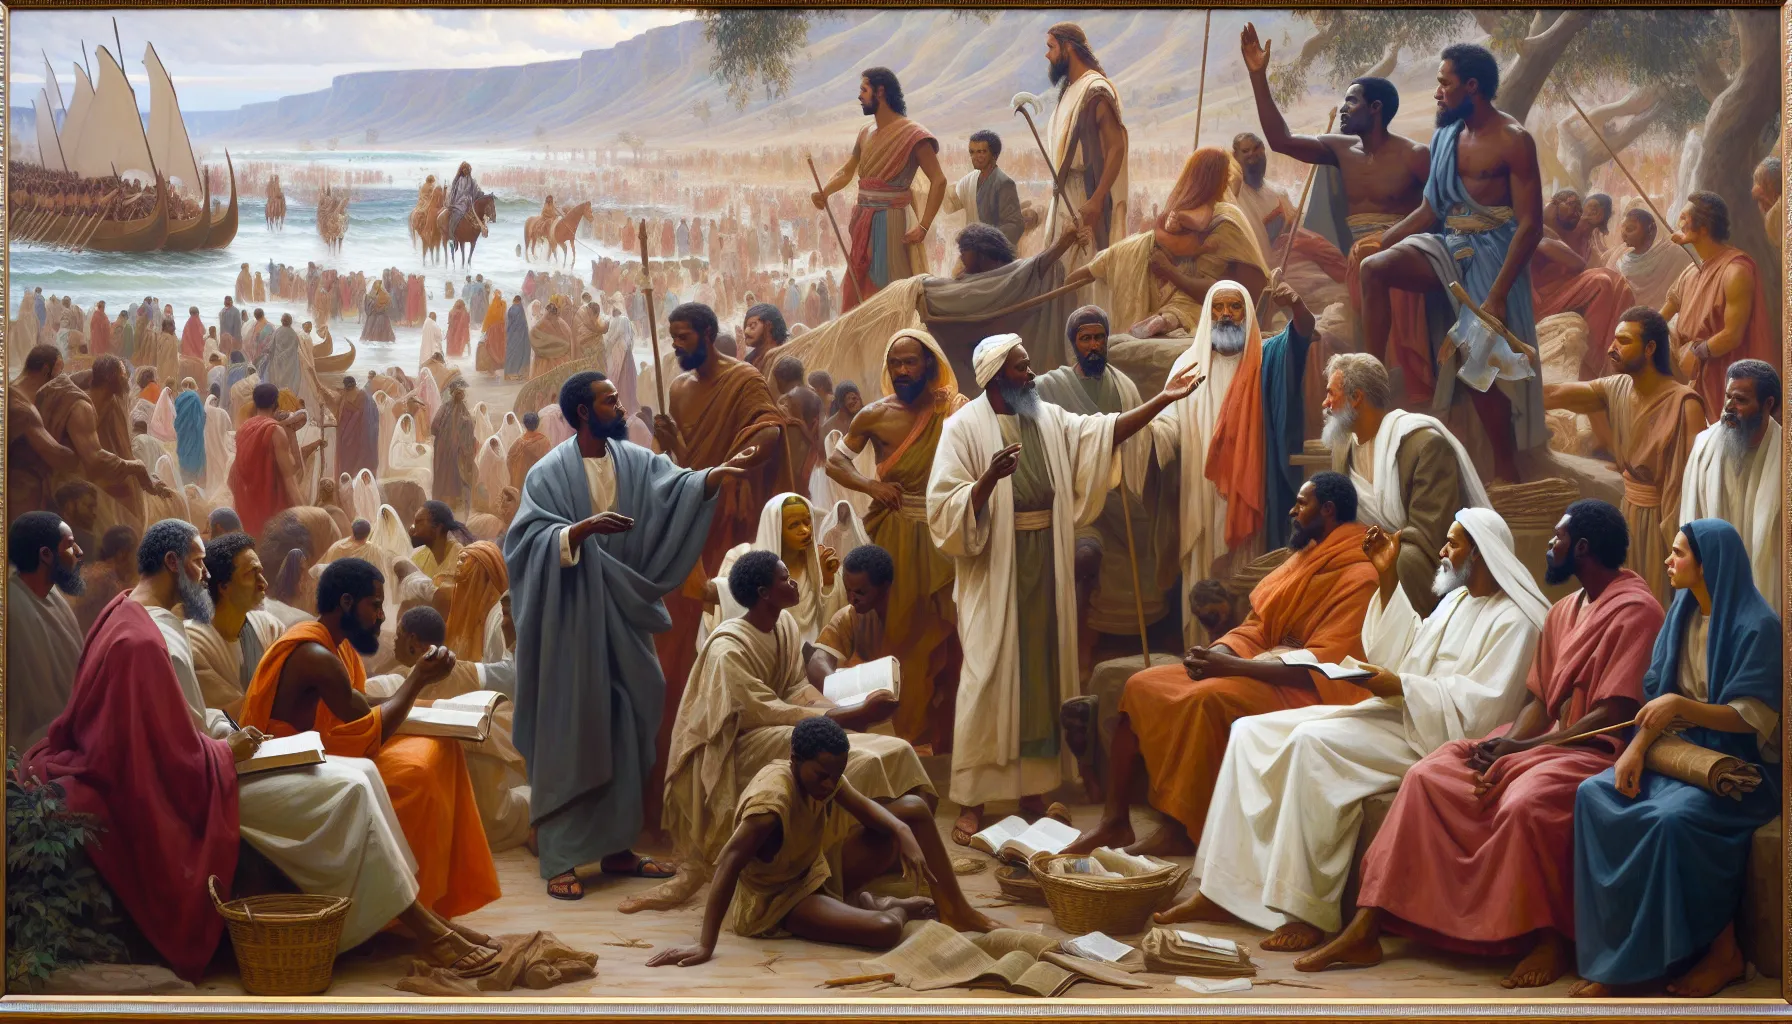 Pintura que representa a personas de ascendencia africana en escenas bíblicas